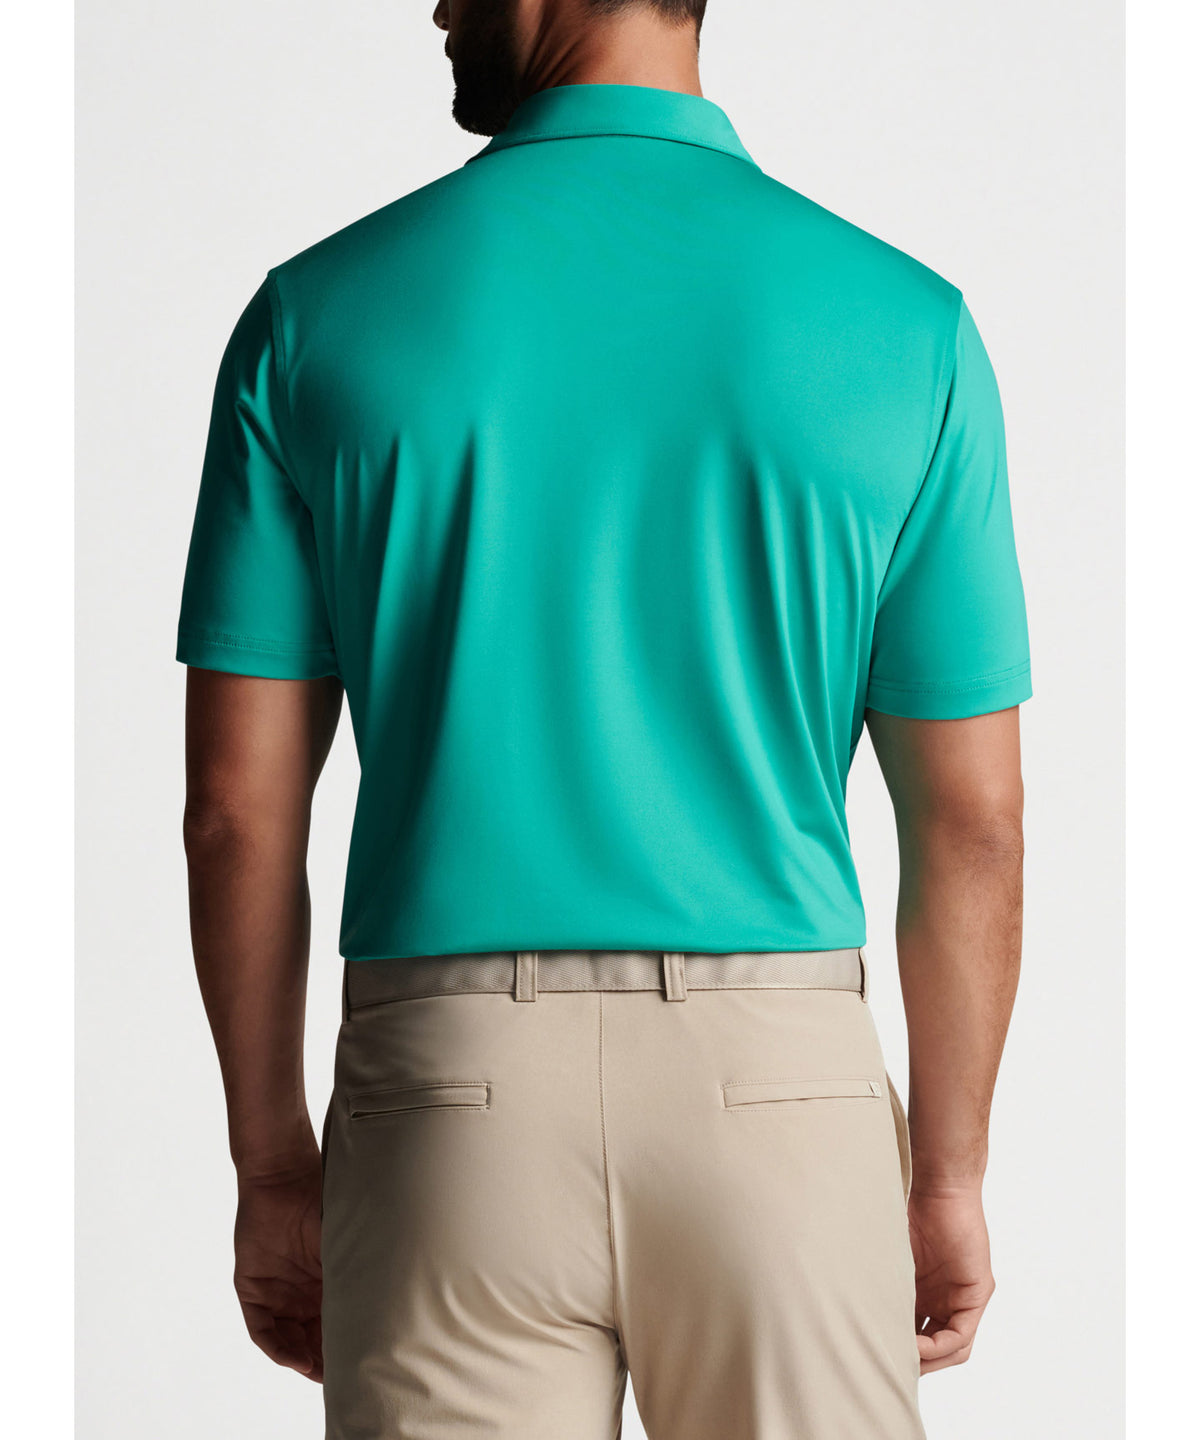 Peter Millar Solid Stretch Jersey Performance Polo Shirt, Men's Big & Tall